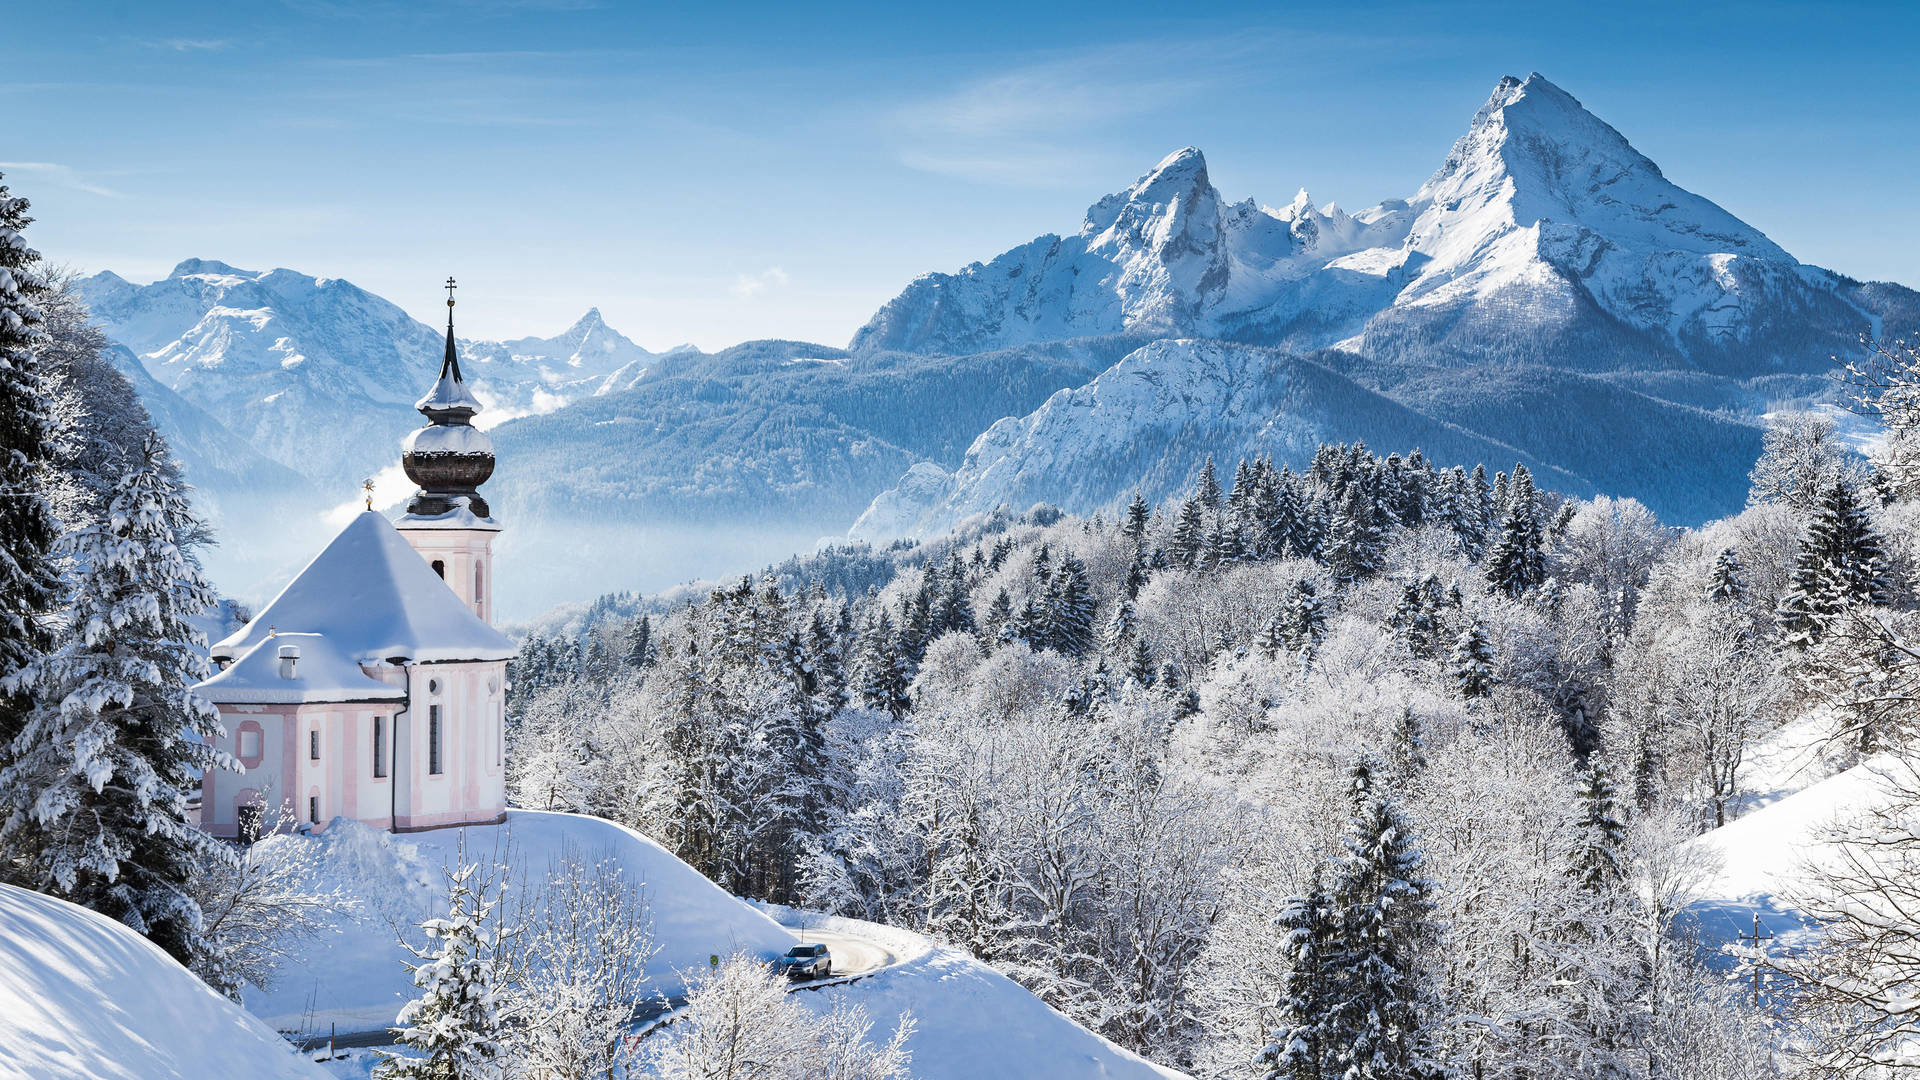 Bavarian Alps Snow Mountain In Winter Background